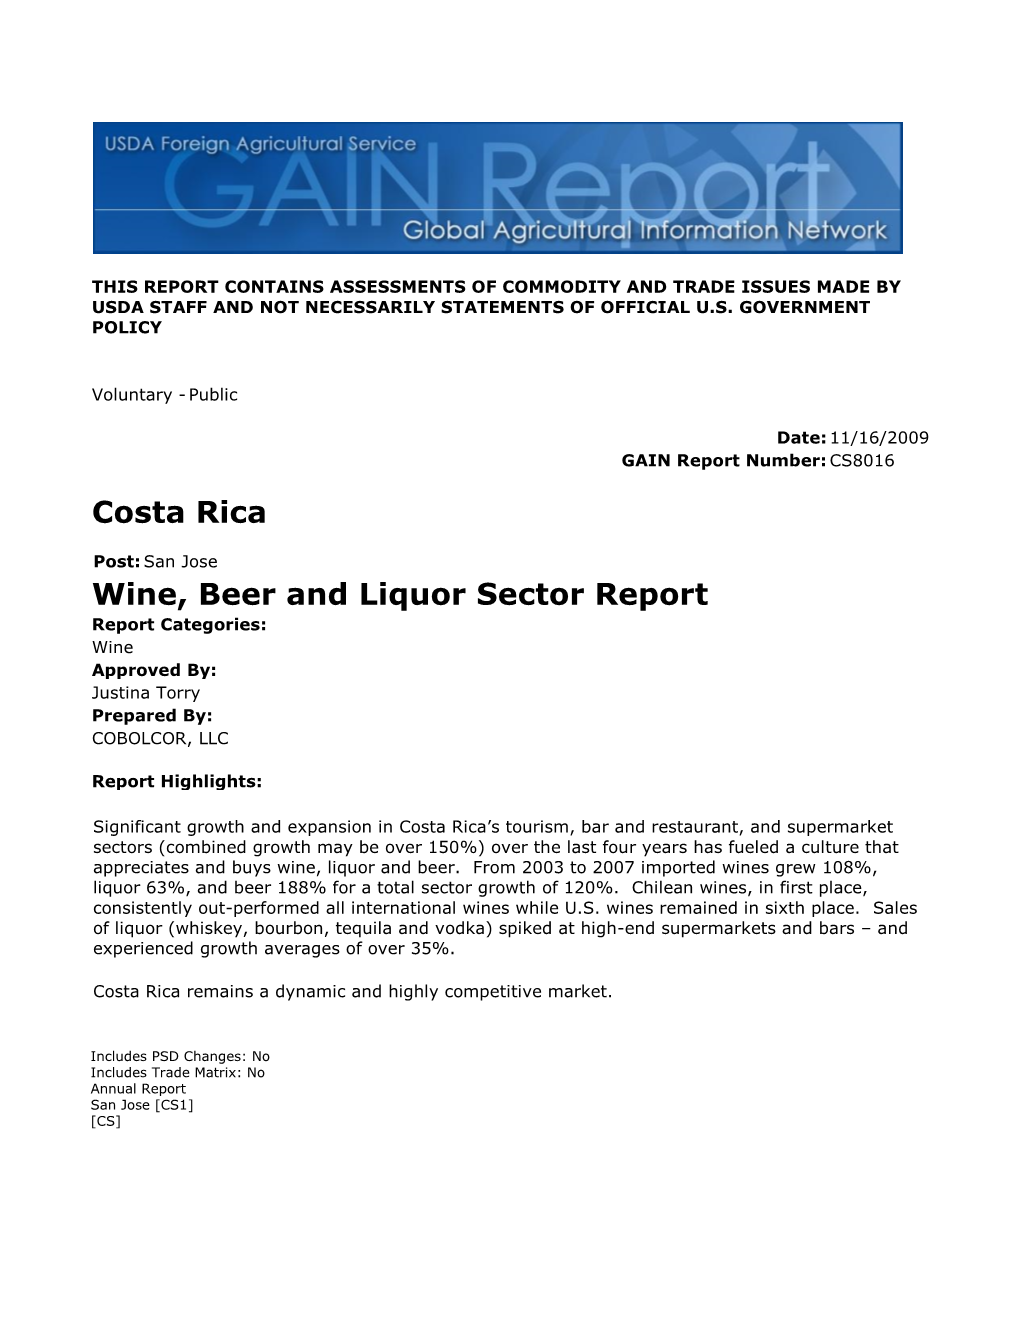 Costa Rica Wine, Beer and Liquor Sector Report